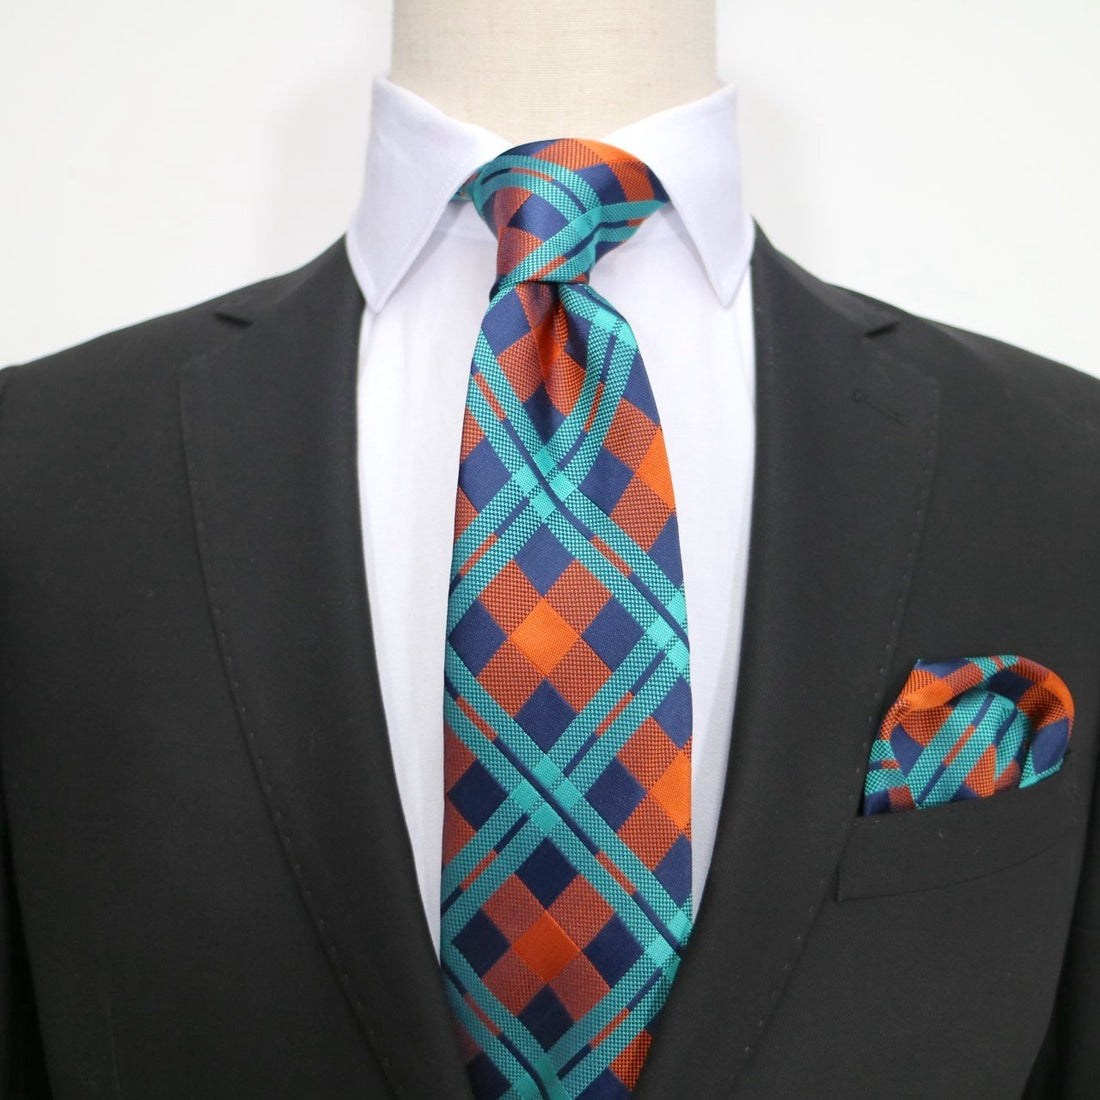 James Adelin Luxury Neck Tie in Navy, Orange and Aqua Check